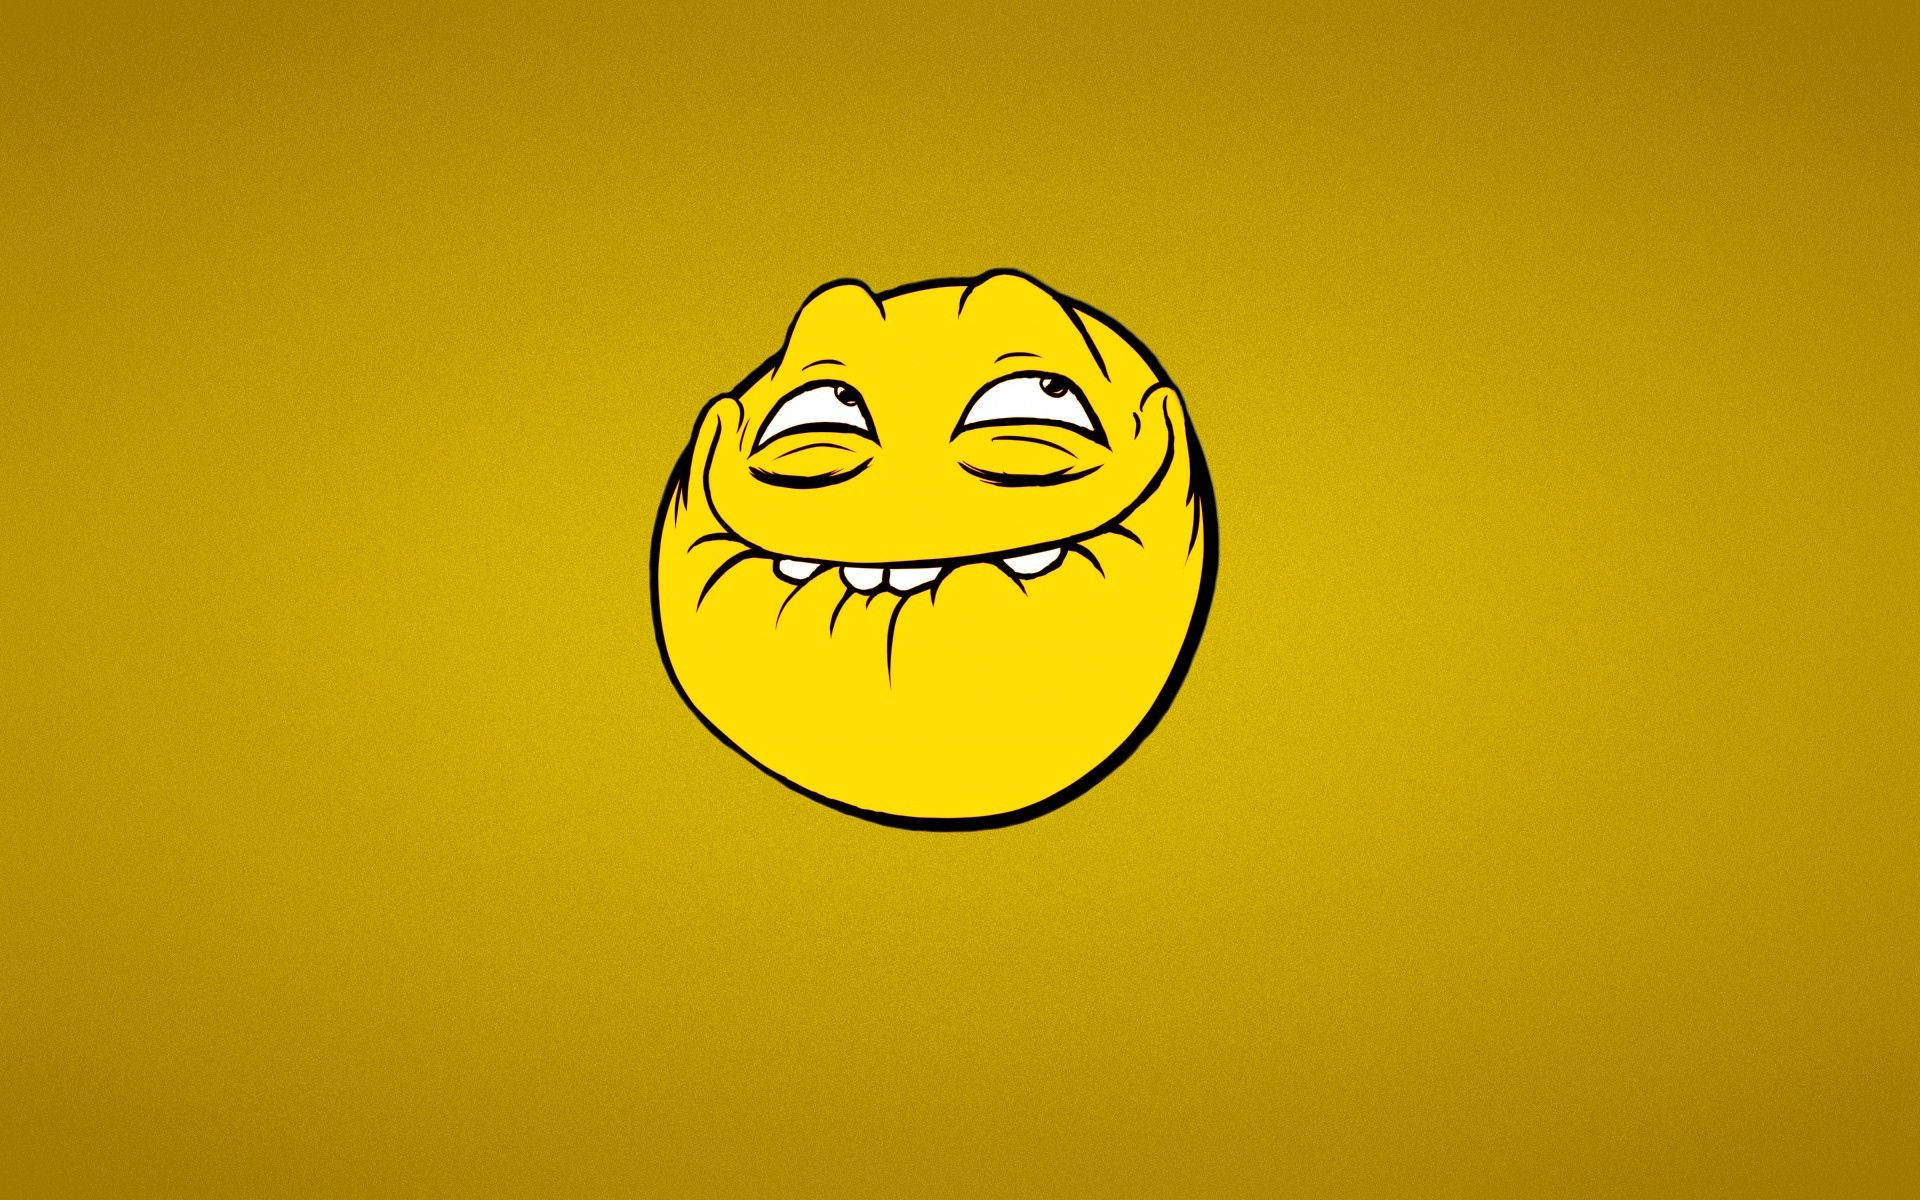 Yellow rage comic meme showing smiling face, happy emotion.